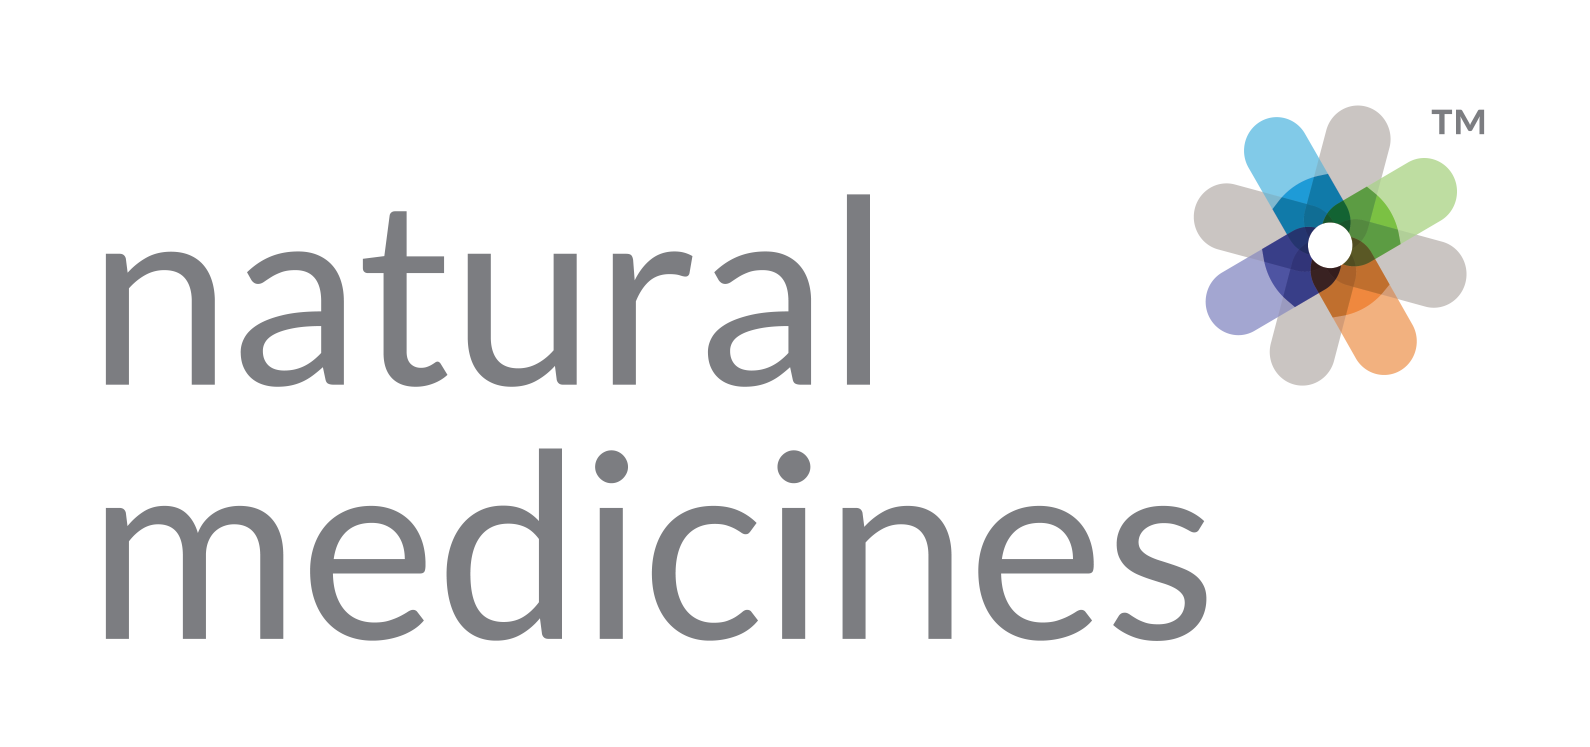 Natural Medicines Comprehensive Database Consumer Version